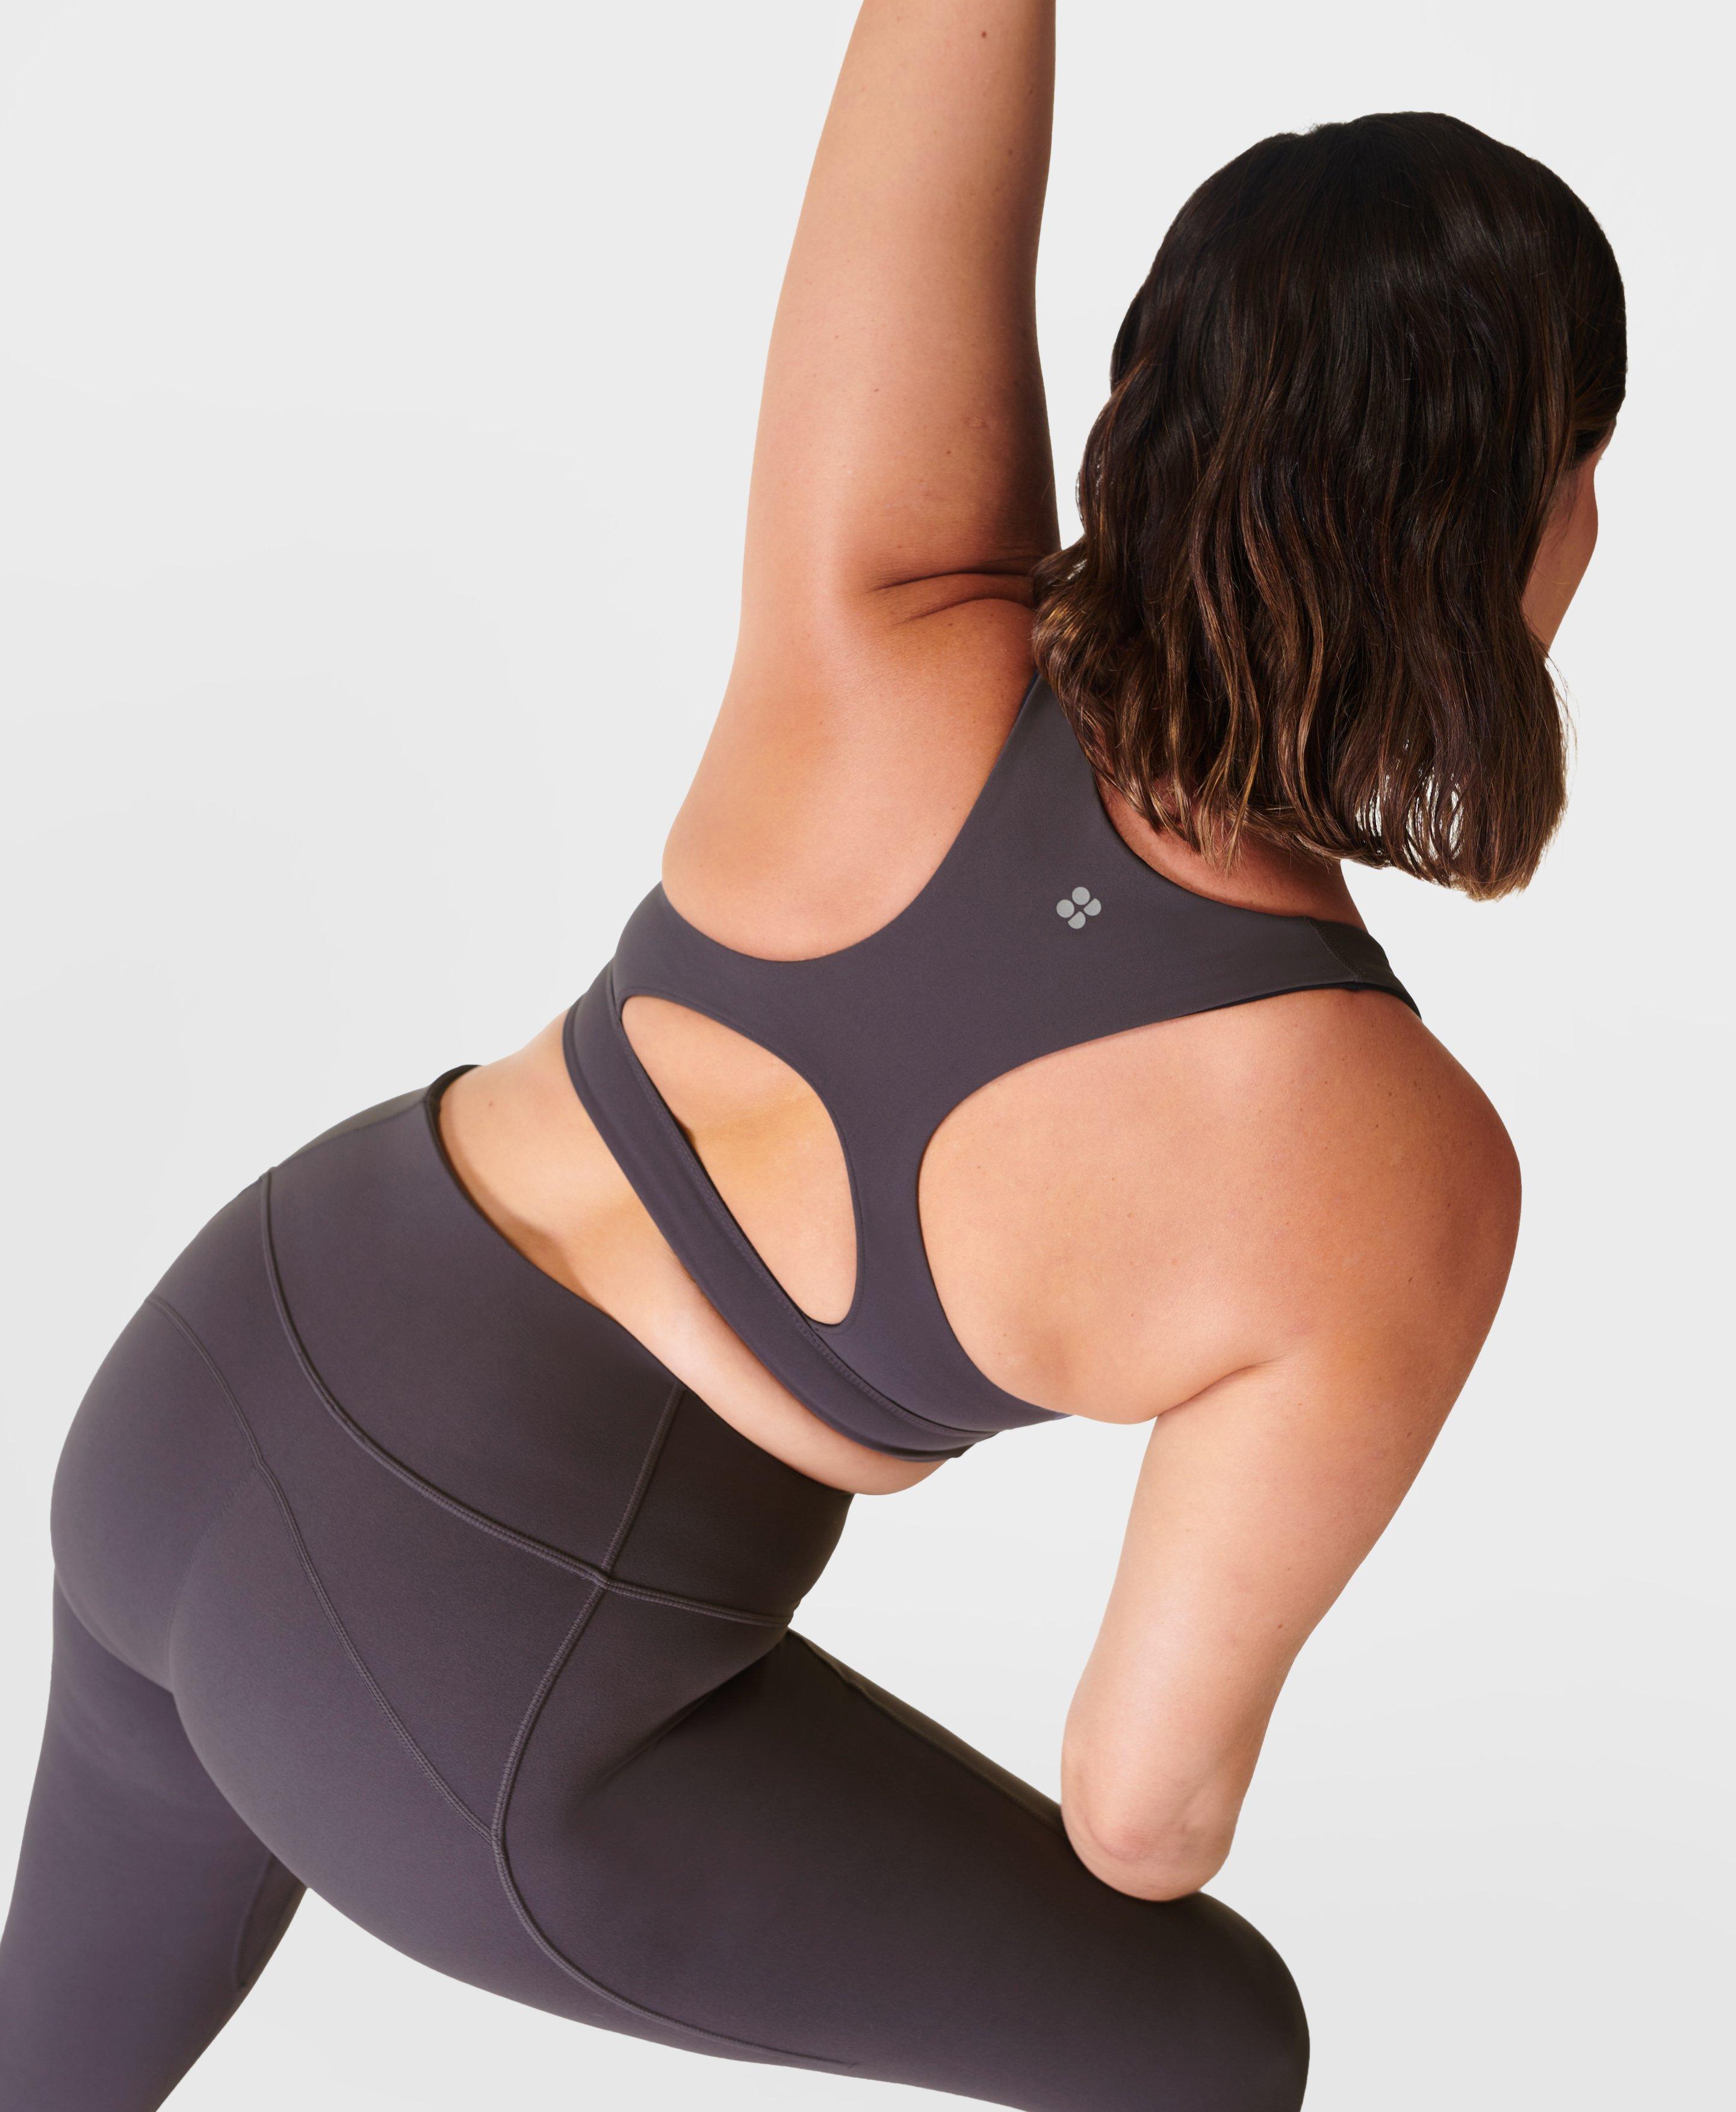 Super Soft Reversible Yoga Bra - XS, Women's Sports Bras